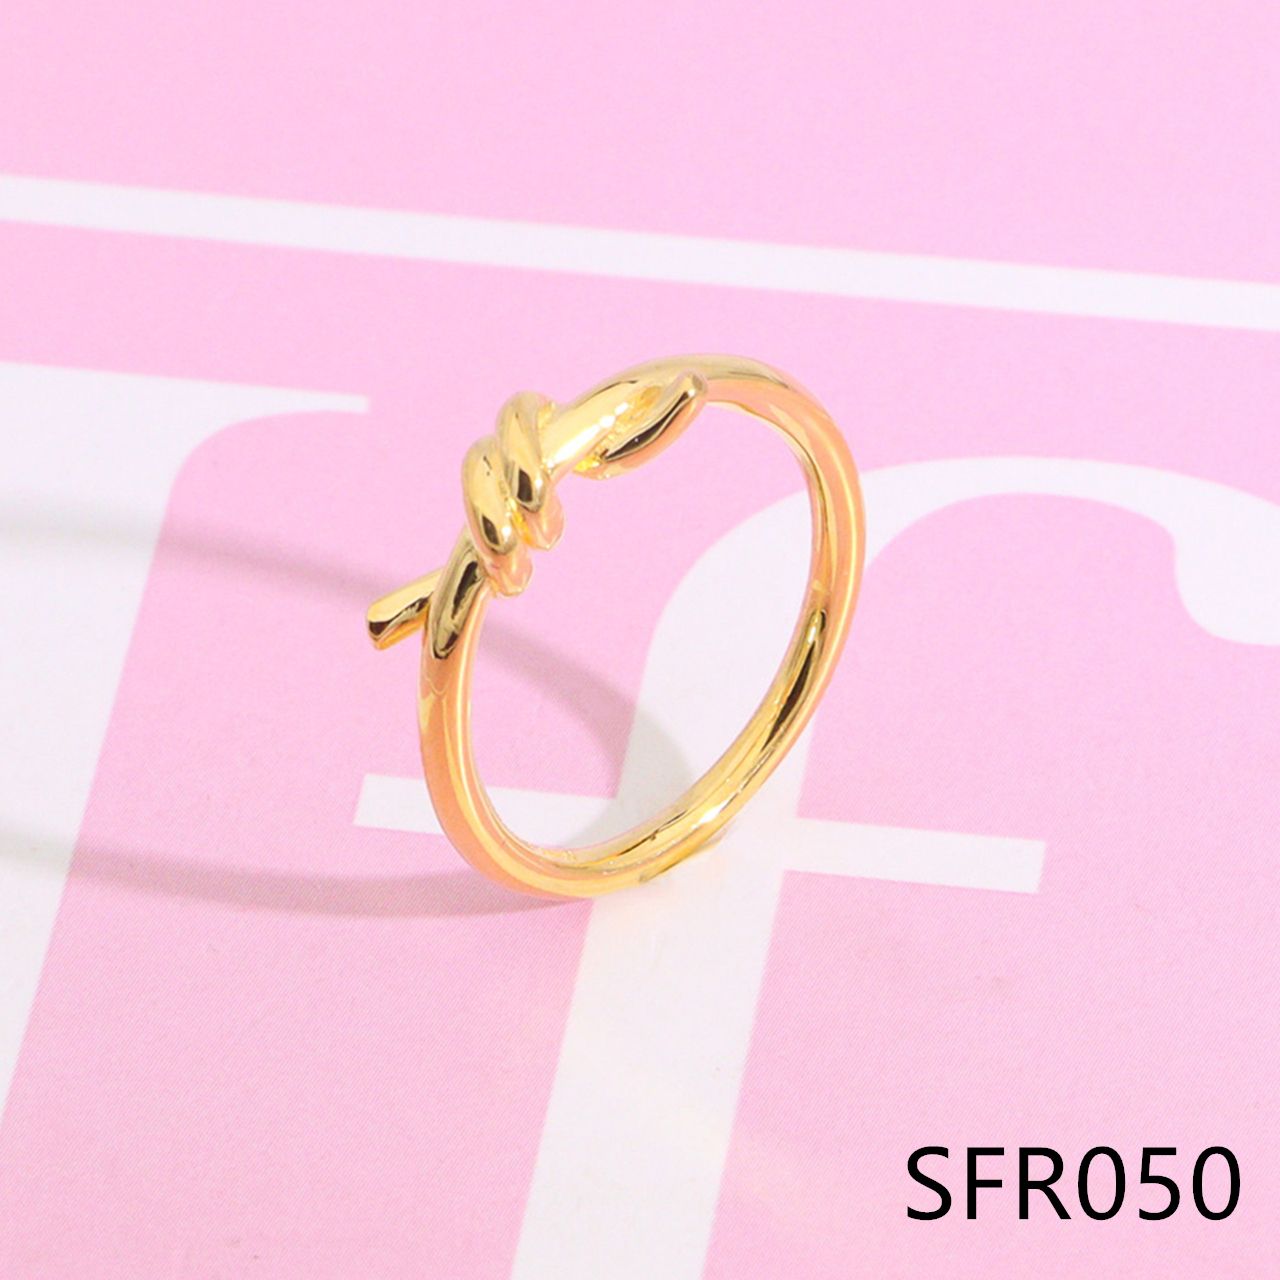 SFR050